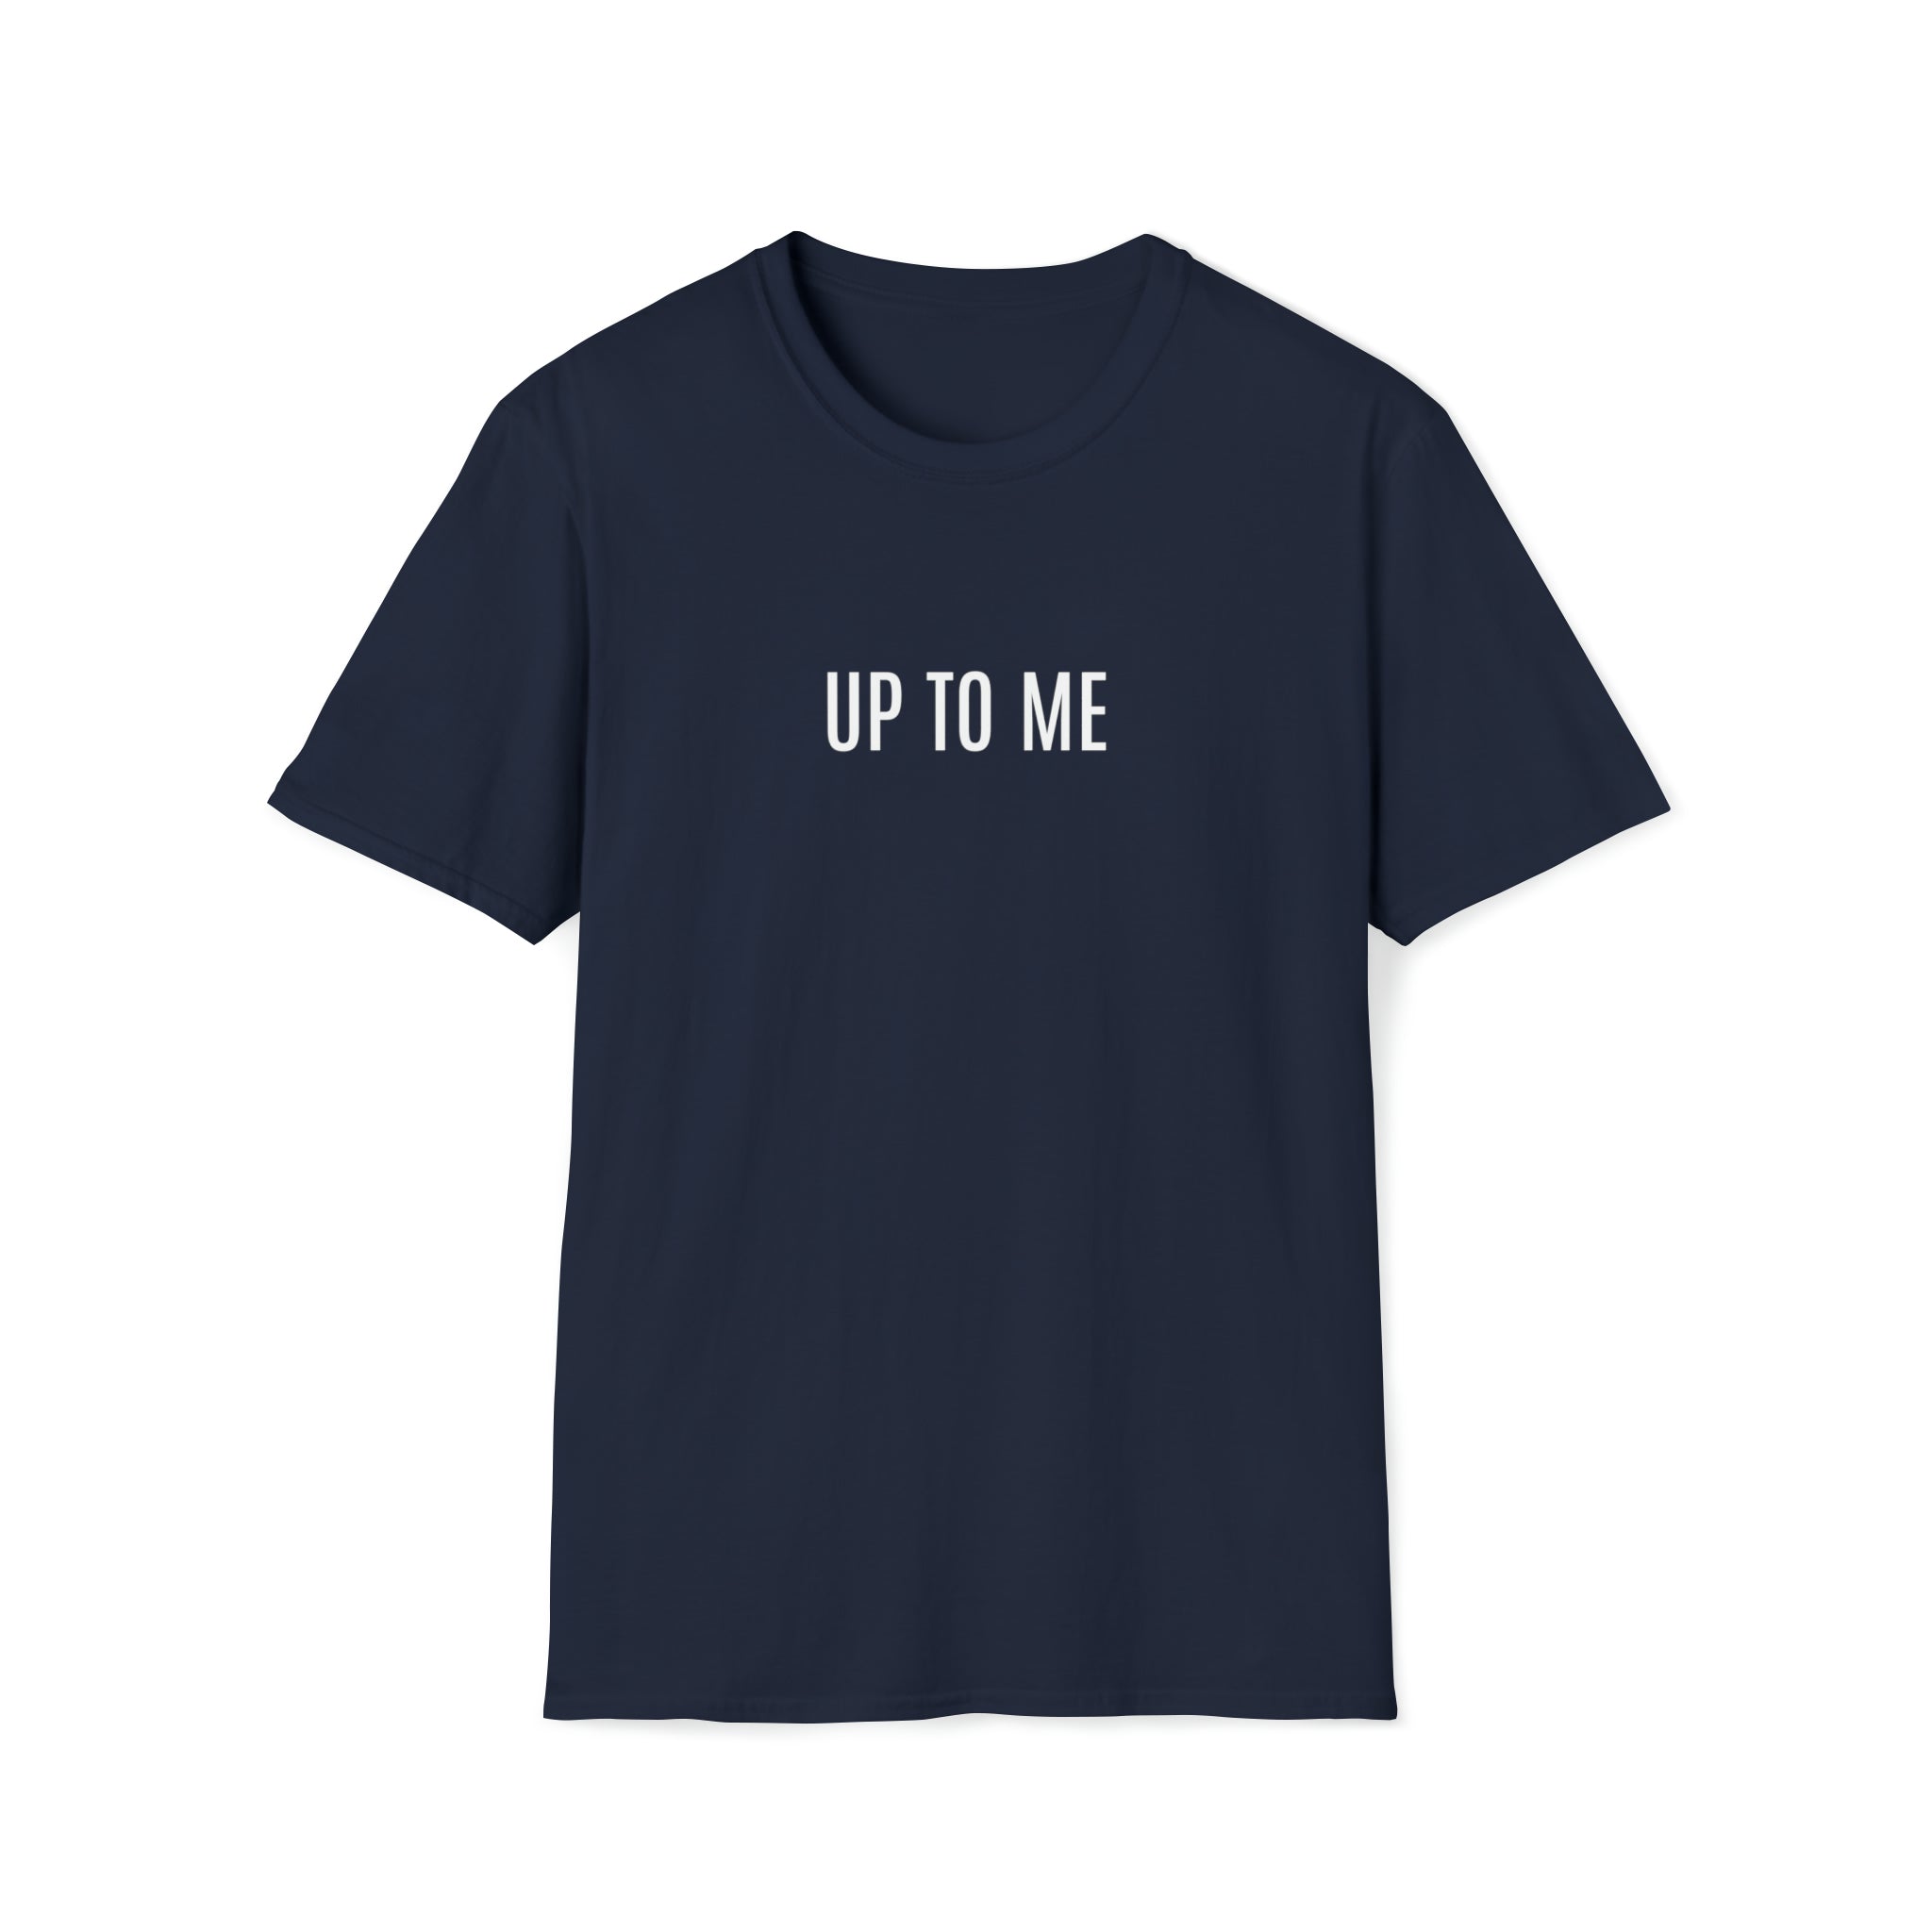 Up to me T-Shirt